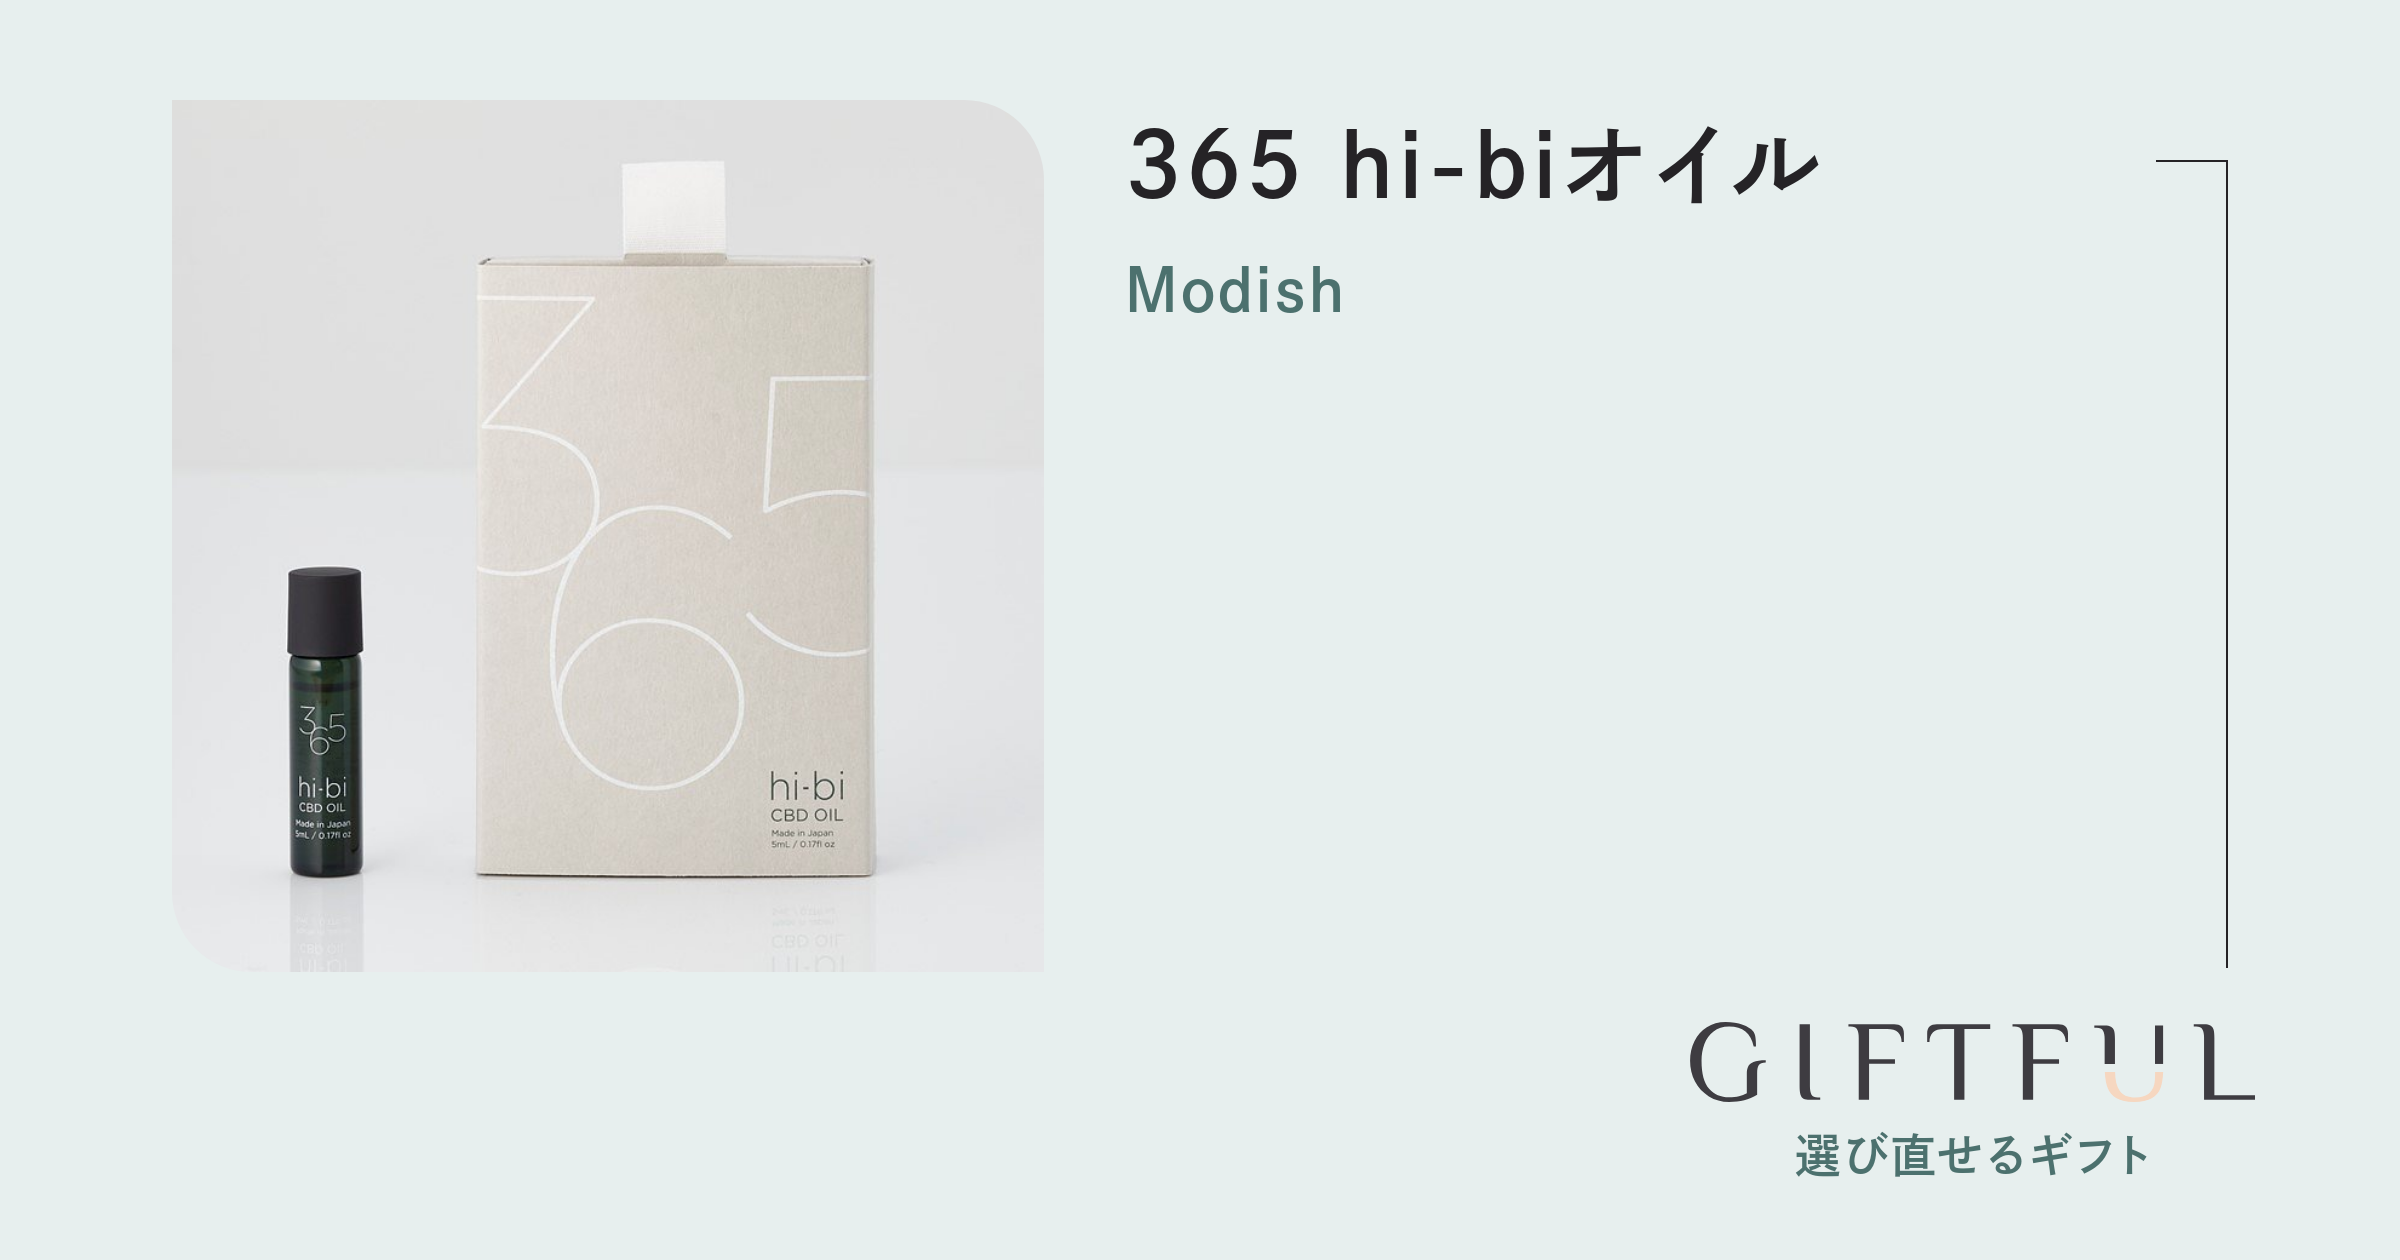 365 hi-biオイル | Modish (モディッシュ) のギフト・プレゼント 